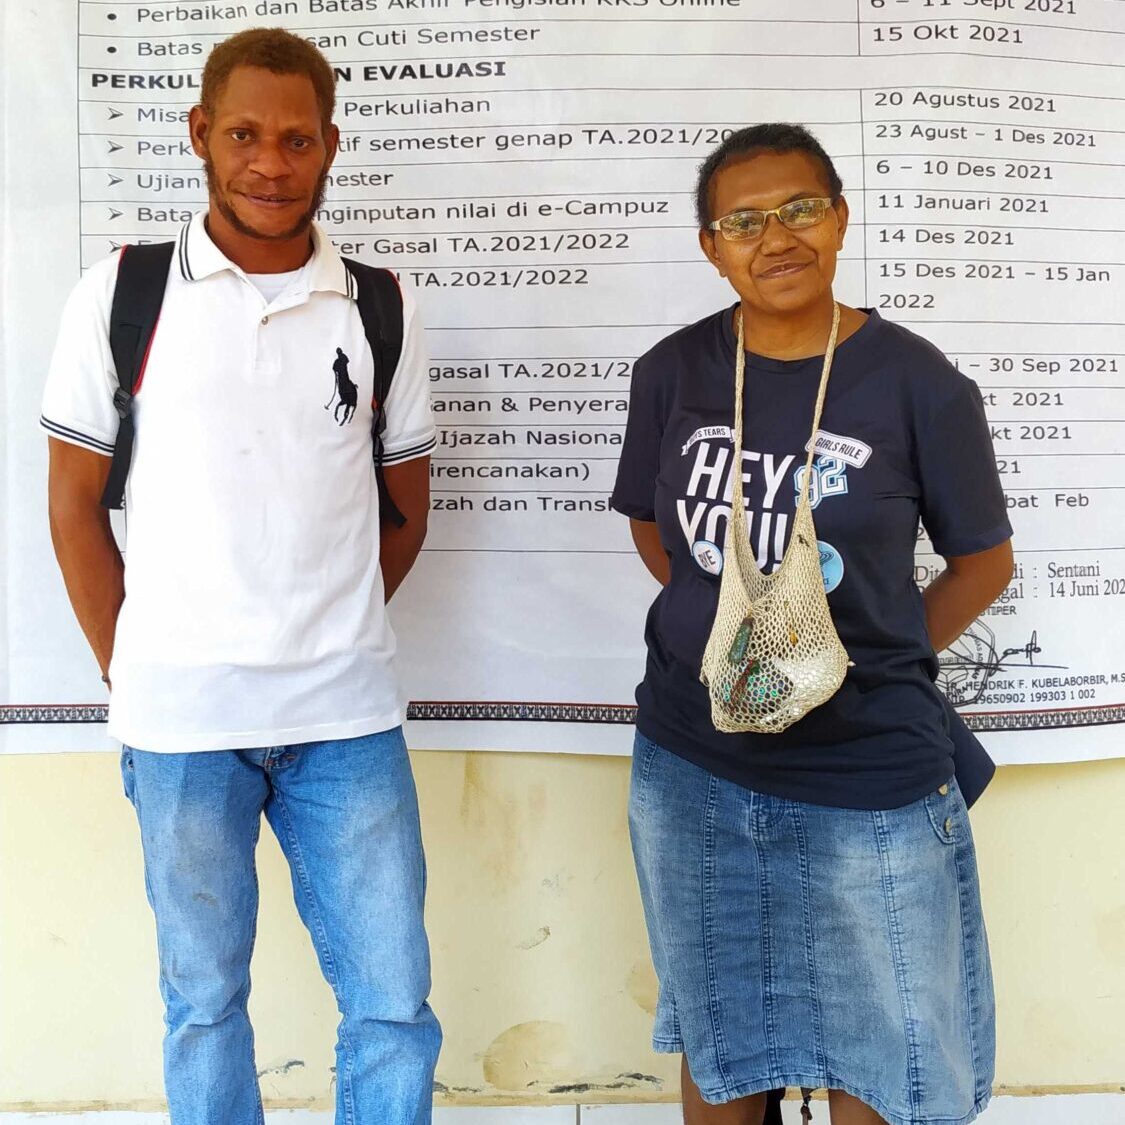 Yeri (left) and scholarship coordinator Nova (right) | Hapin